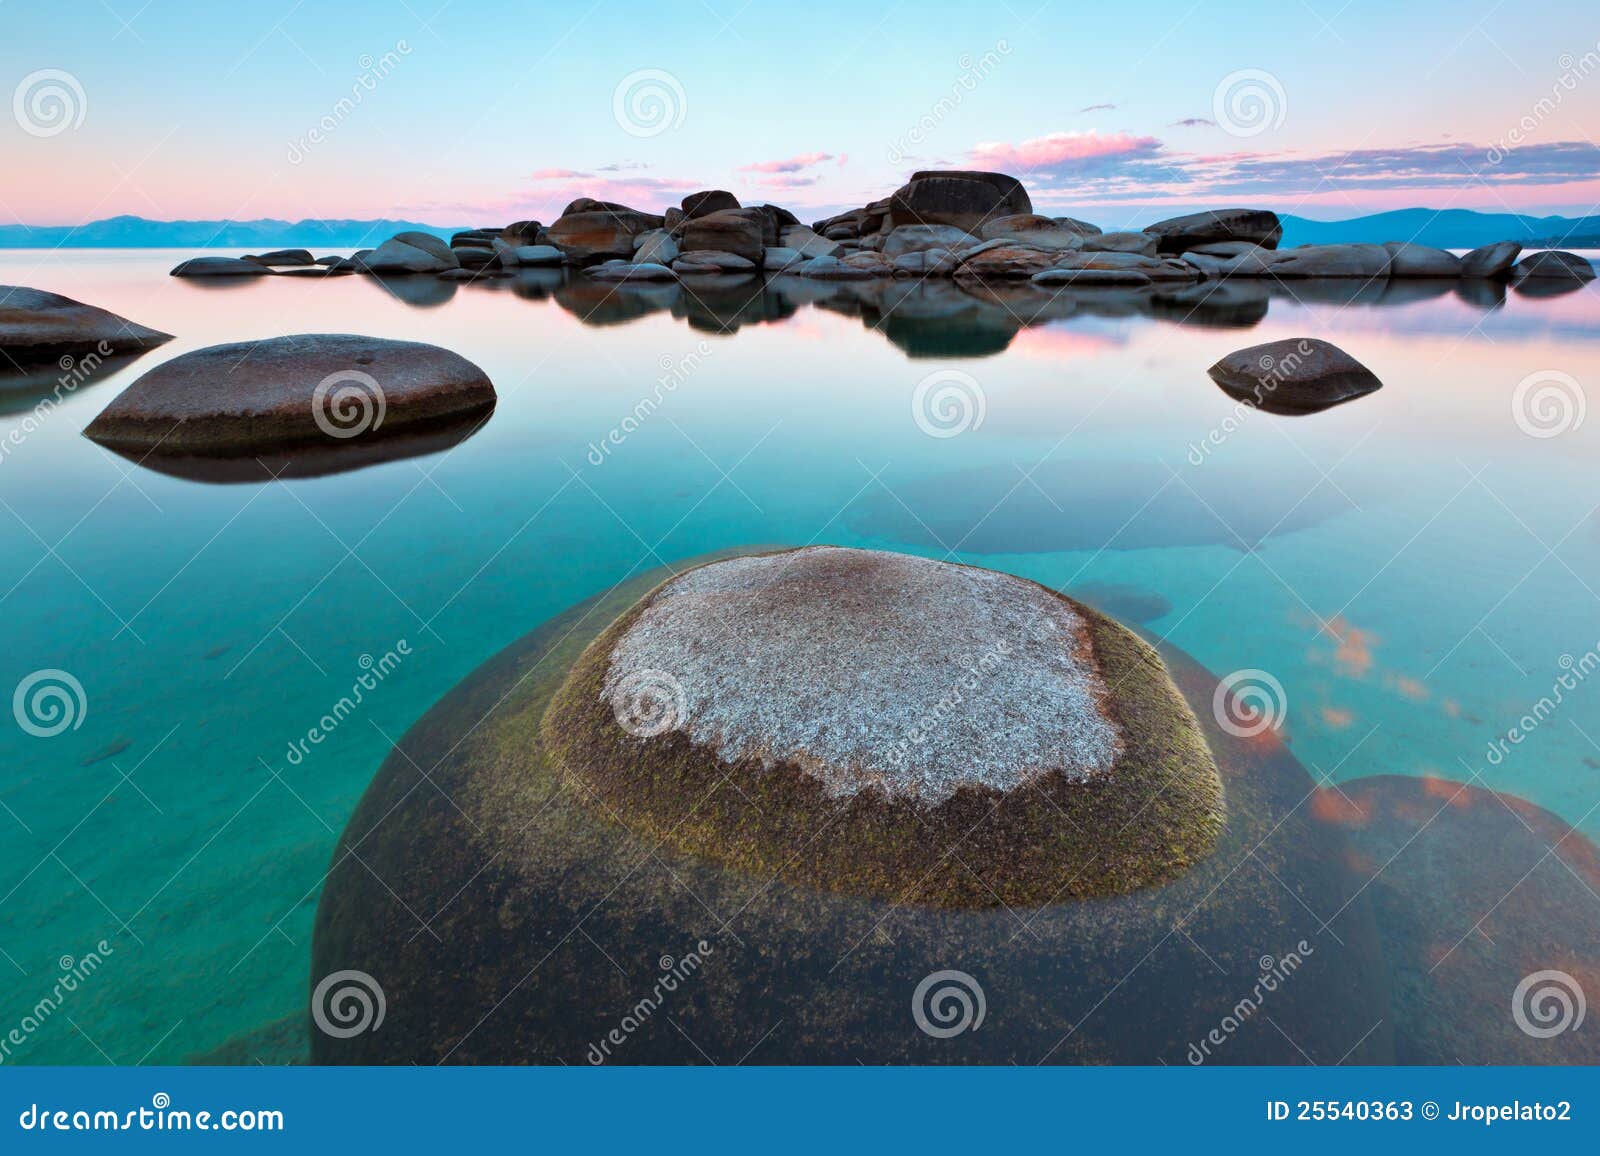 round rock, sand harbor, lake tahoe